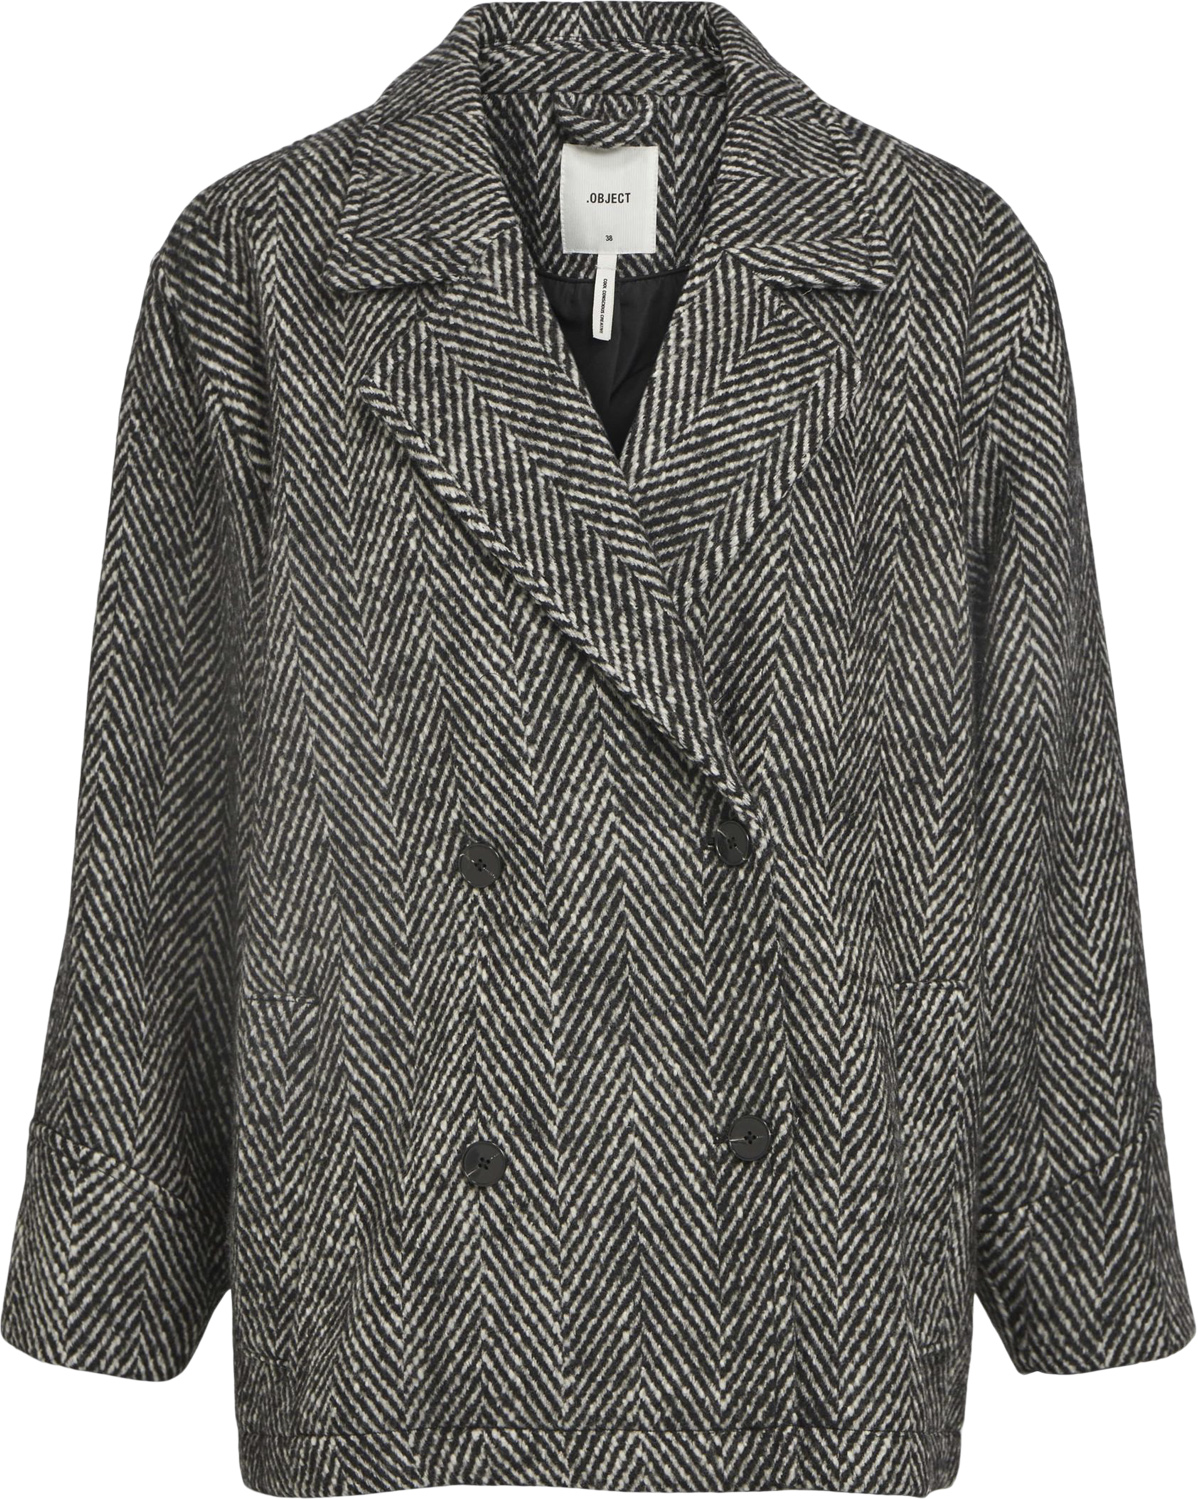 Objnilla Oversize Wool Jacket 129